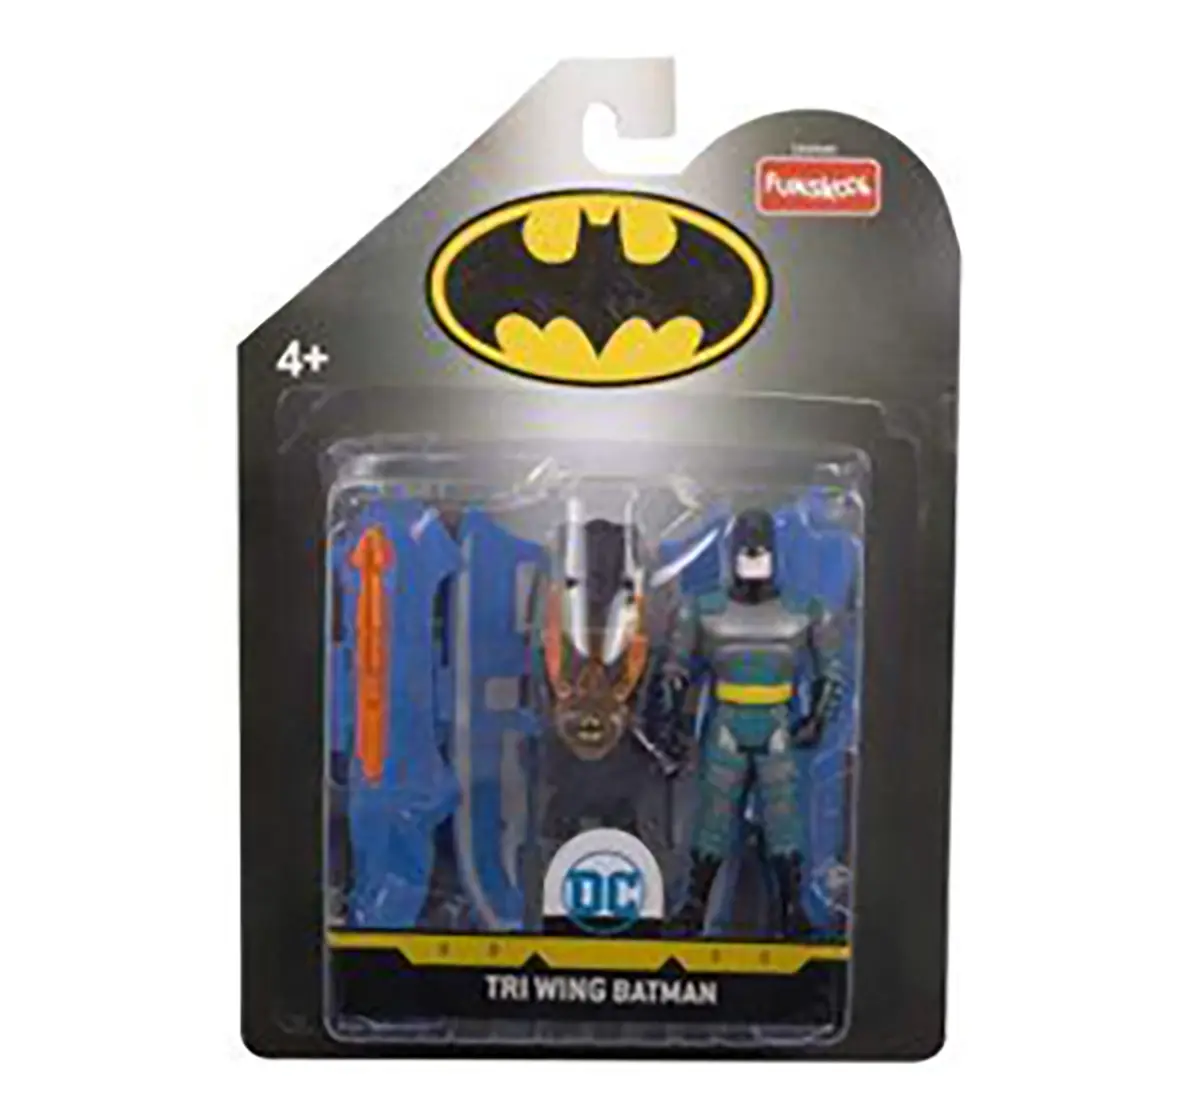 Dc Triwing Batman 2018 Action Figures for Kids age 4Y+ 